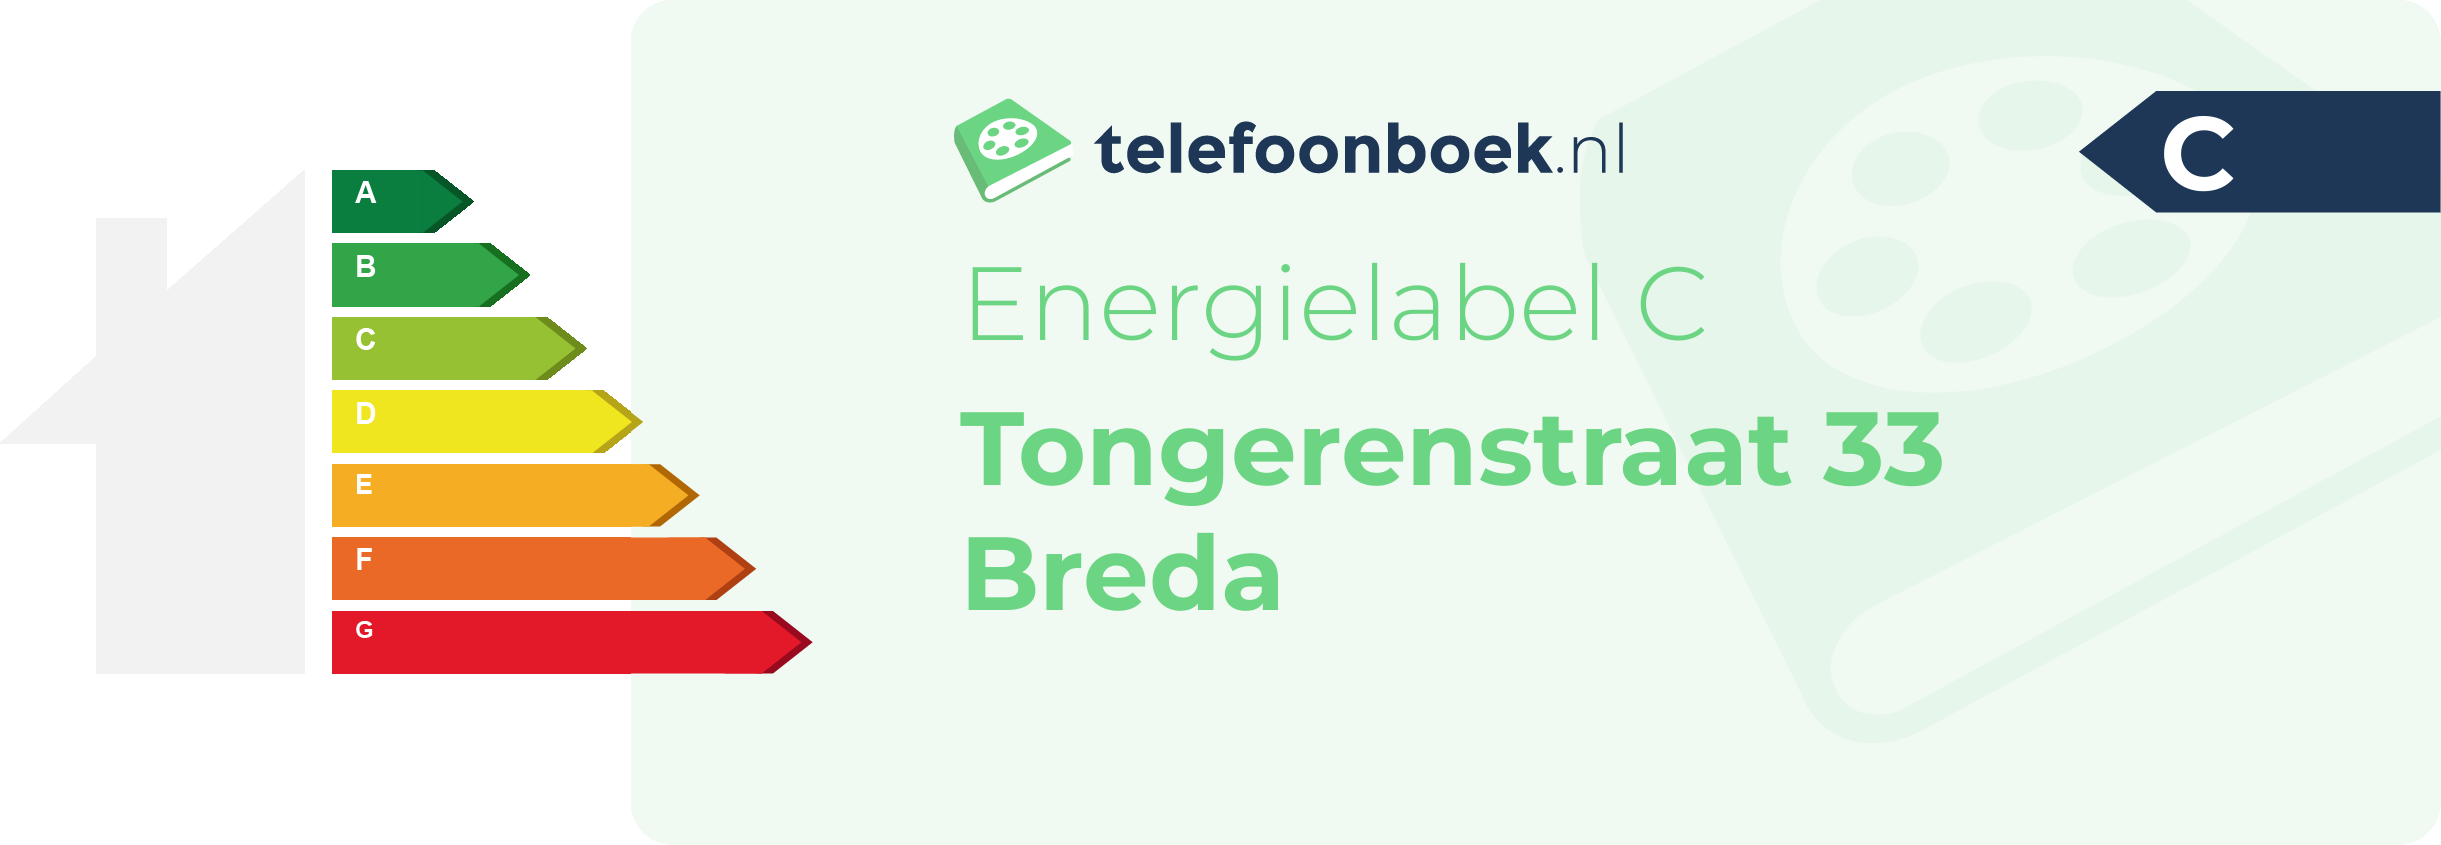 Energielabel Tongerenstraat 33 Breda